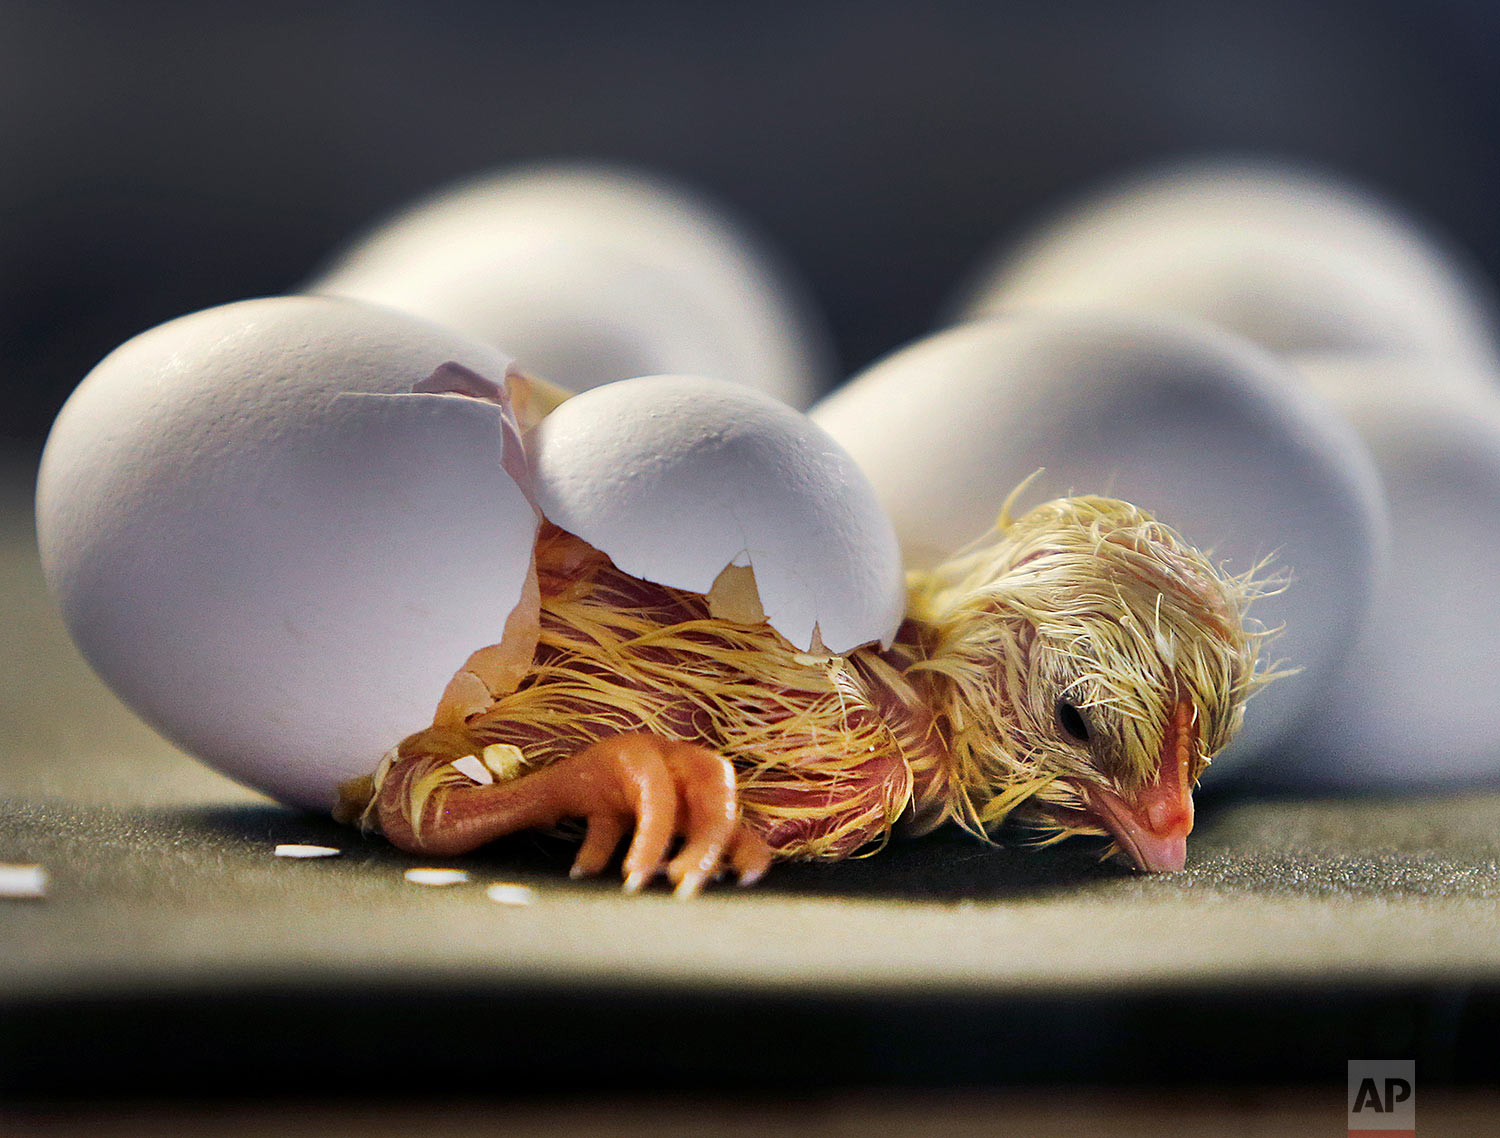 Hatching eggs. Птенец вылупившийся из яйца. Птенец вылупляется из яйца. Цыпленок вылупляется из яйца. Цыпленок вылупился.